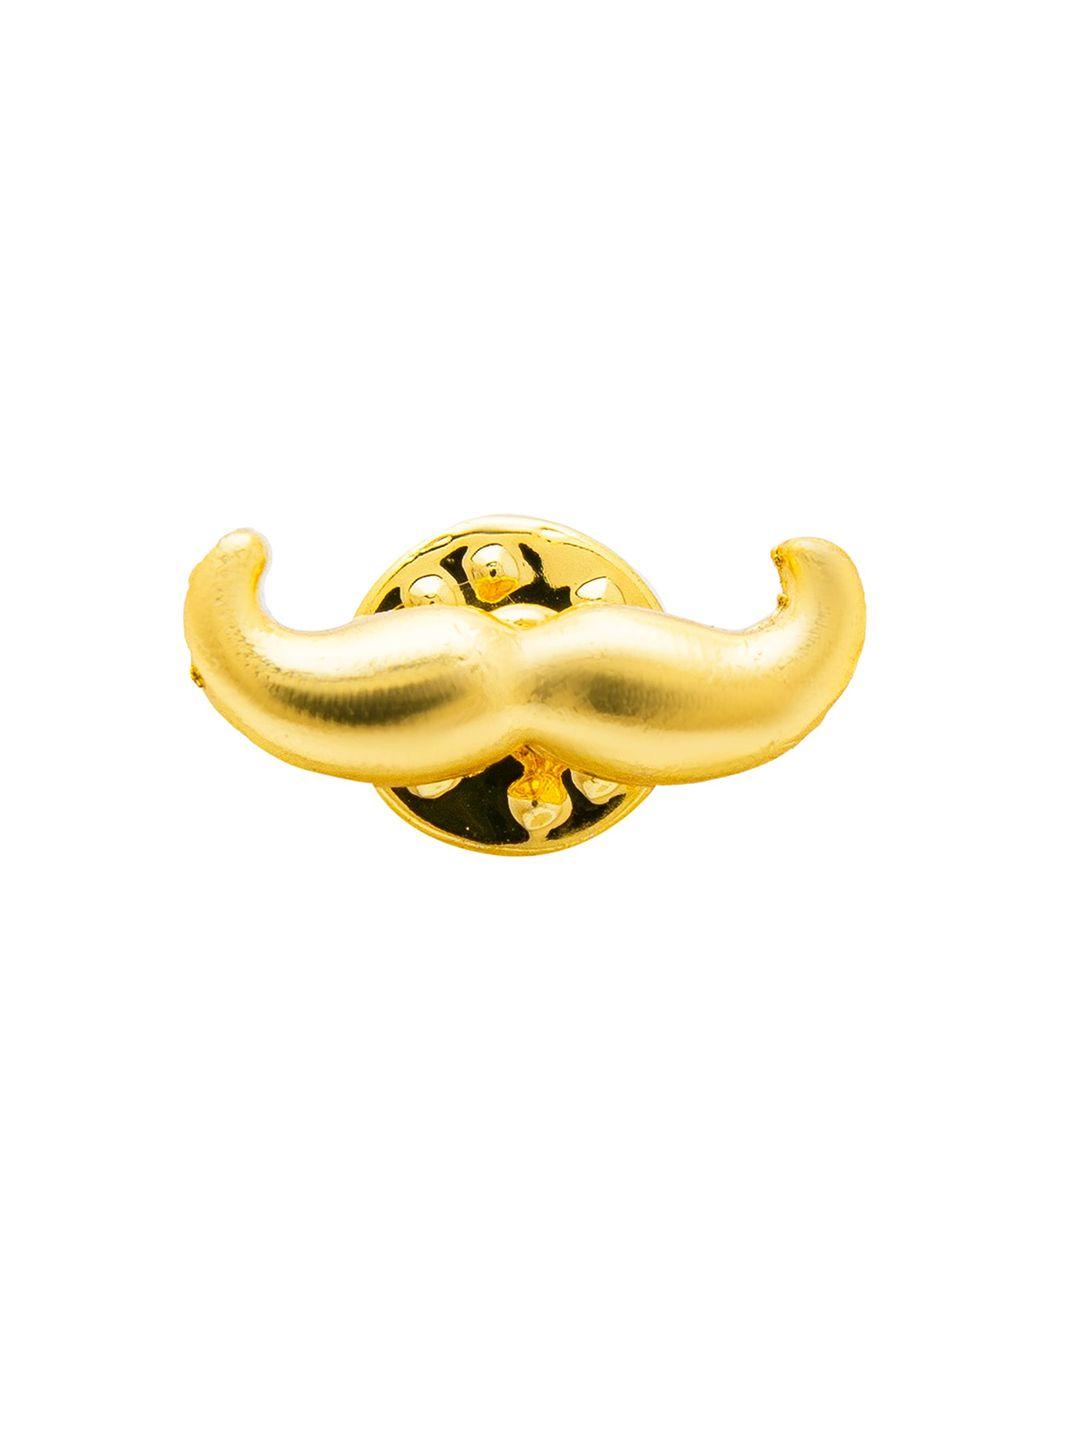 shining jewel - by shivansh men silver-plated gold-toned moustache-shaped brooch